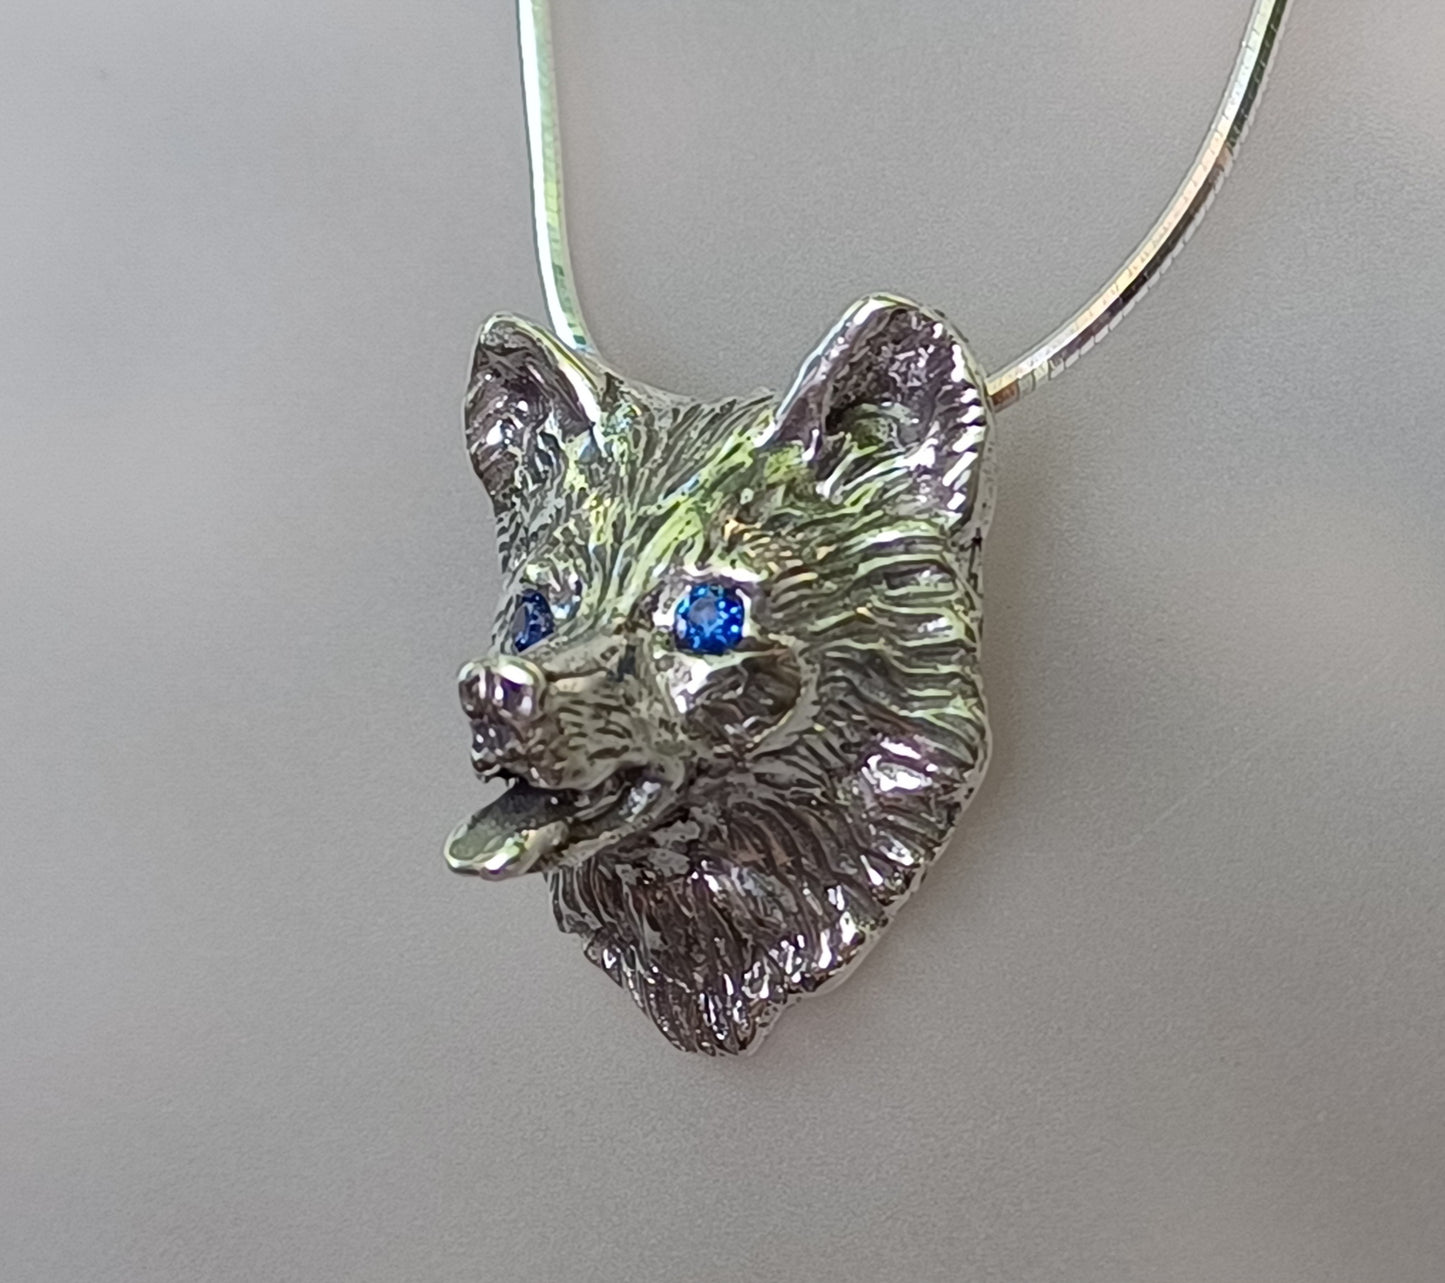 Pembroke Welsh Corgi Sterling Silver pendant and chain necklace. Stone set eyes.